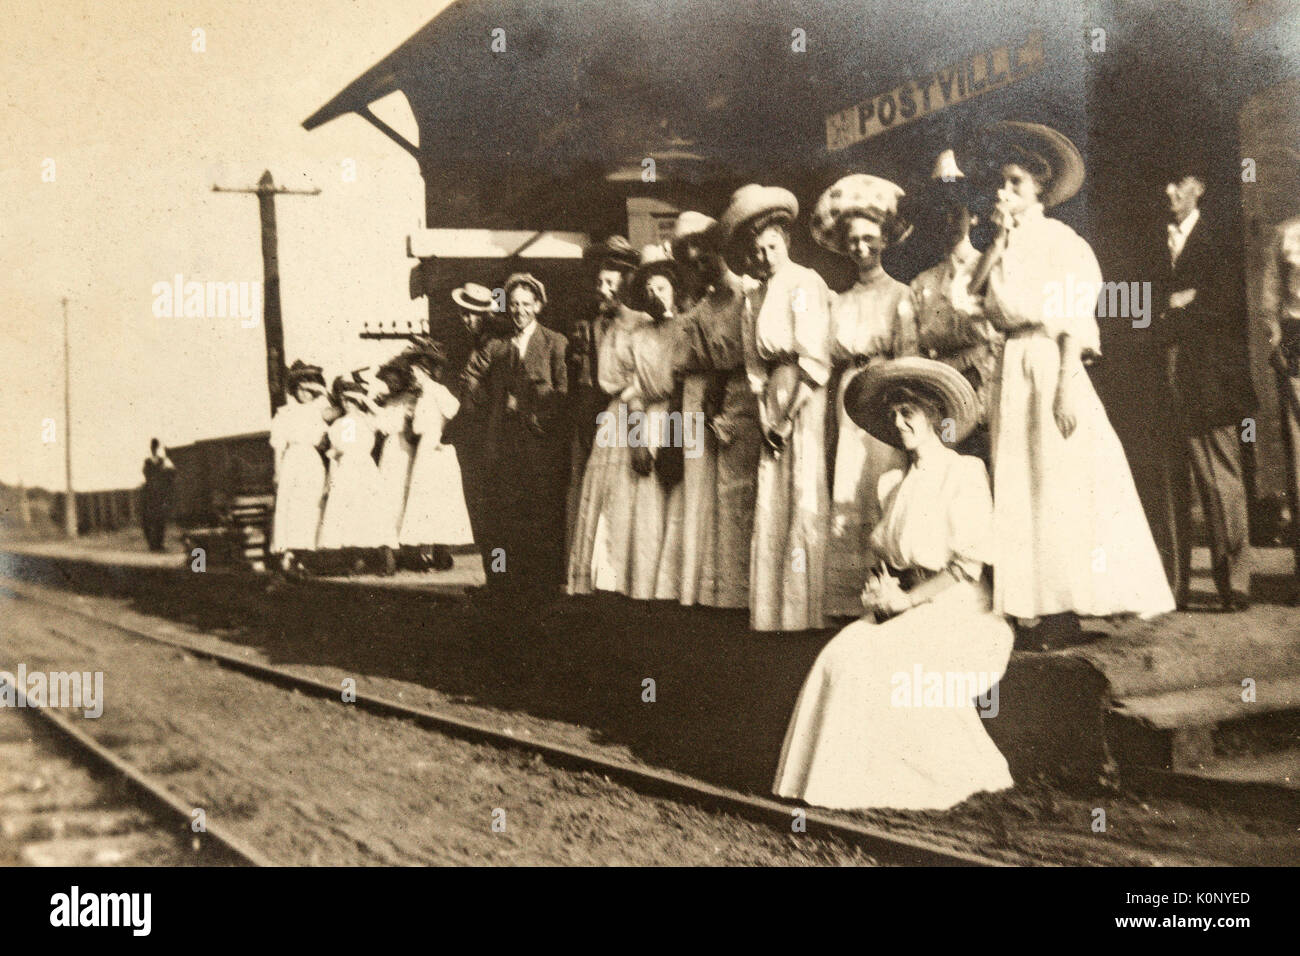 Men and women in the years 1907-1908 in Postville Iowa Stock Photo